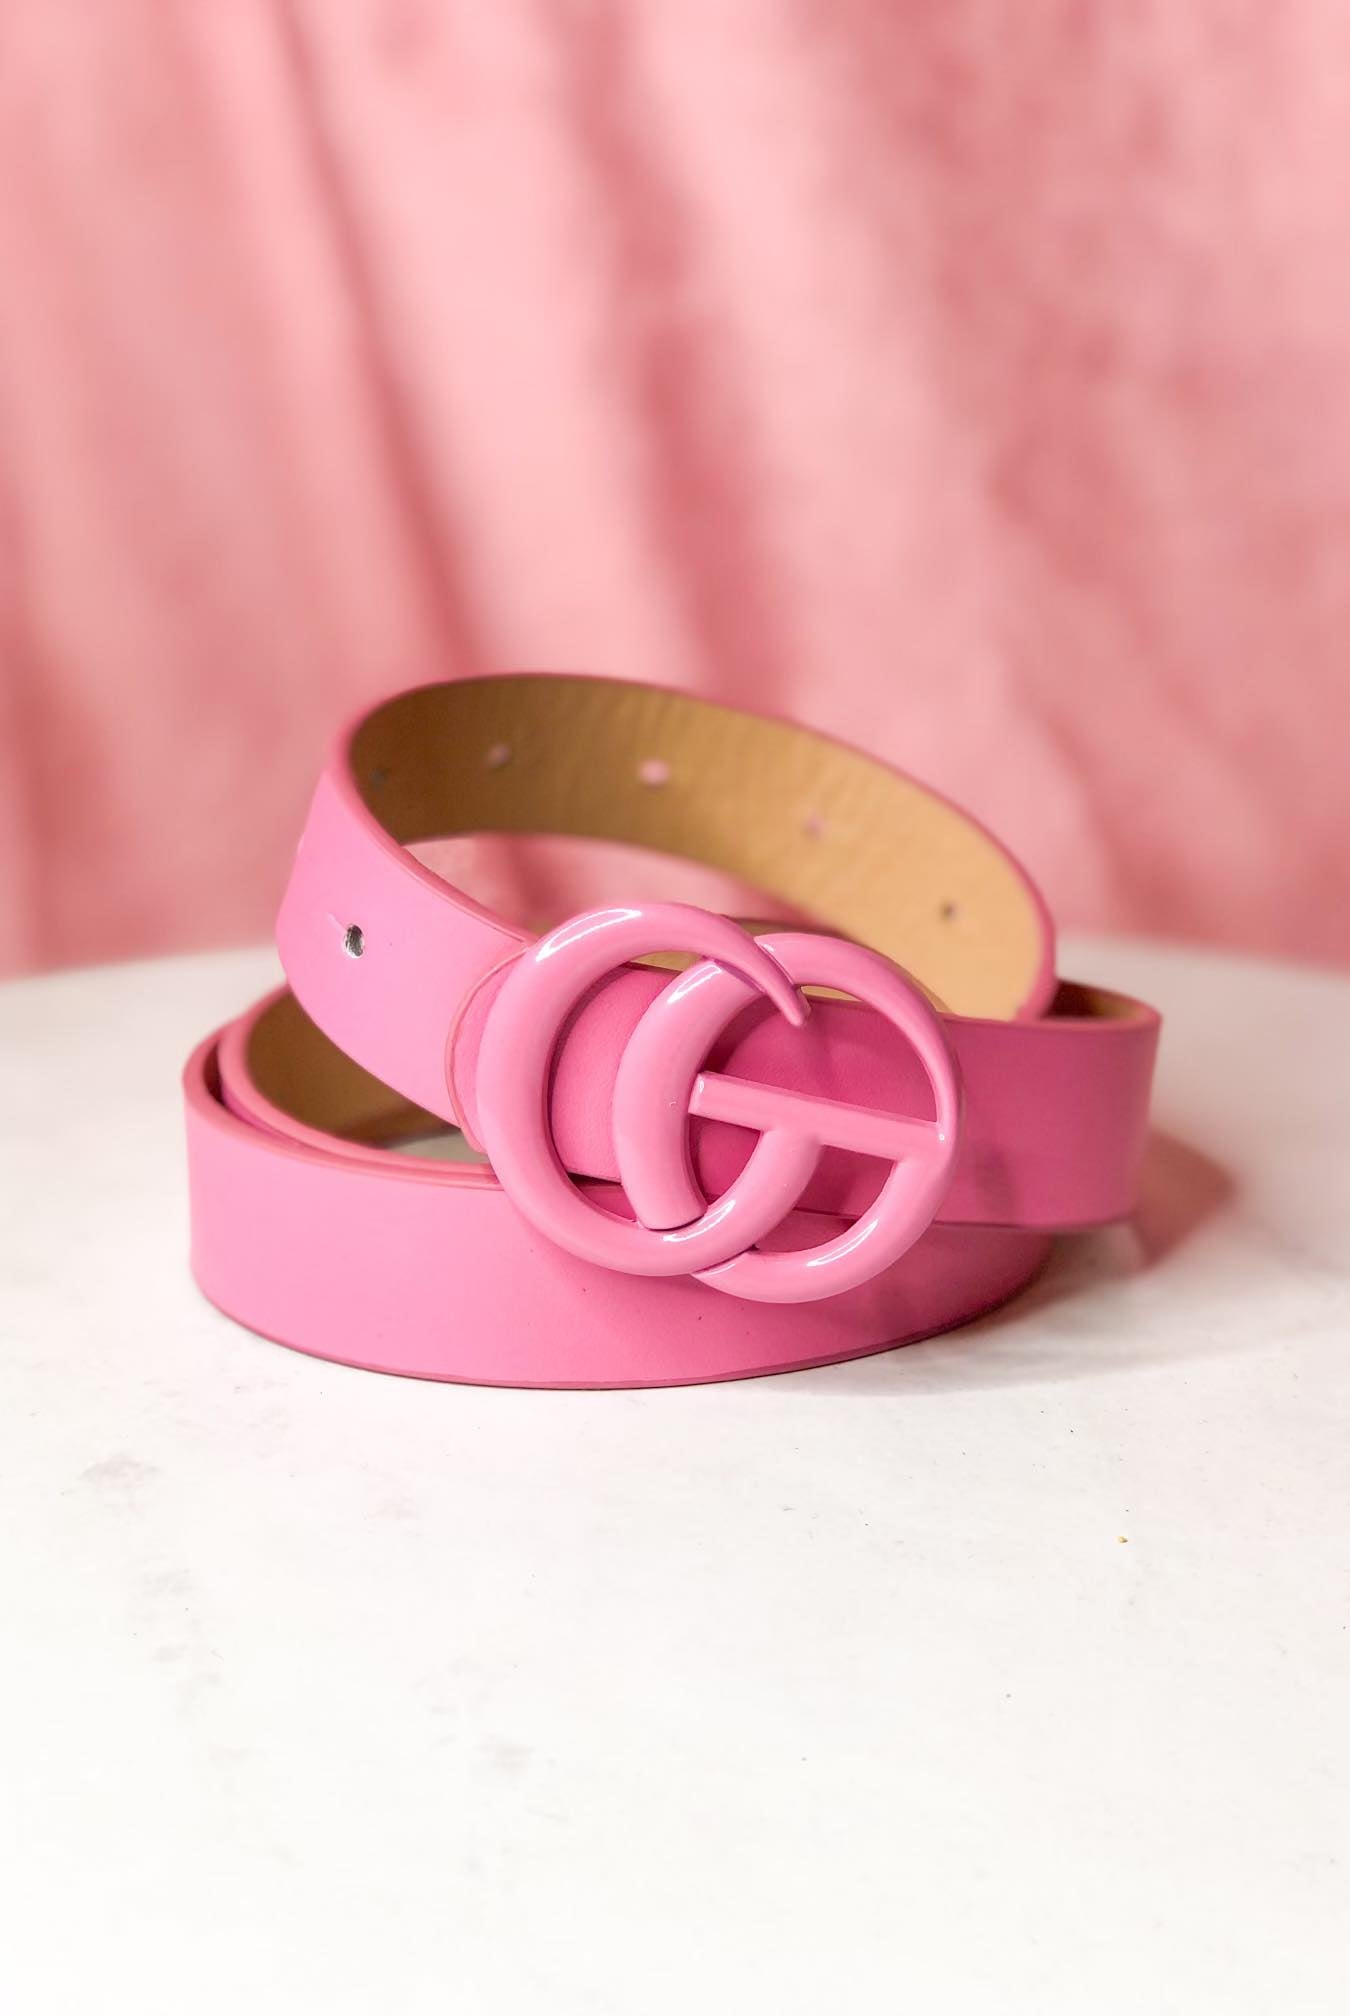 GiGi Slim Color Coated Buckle Belt ~ Taupe - Be You Boutique